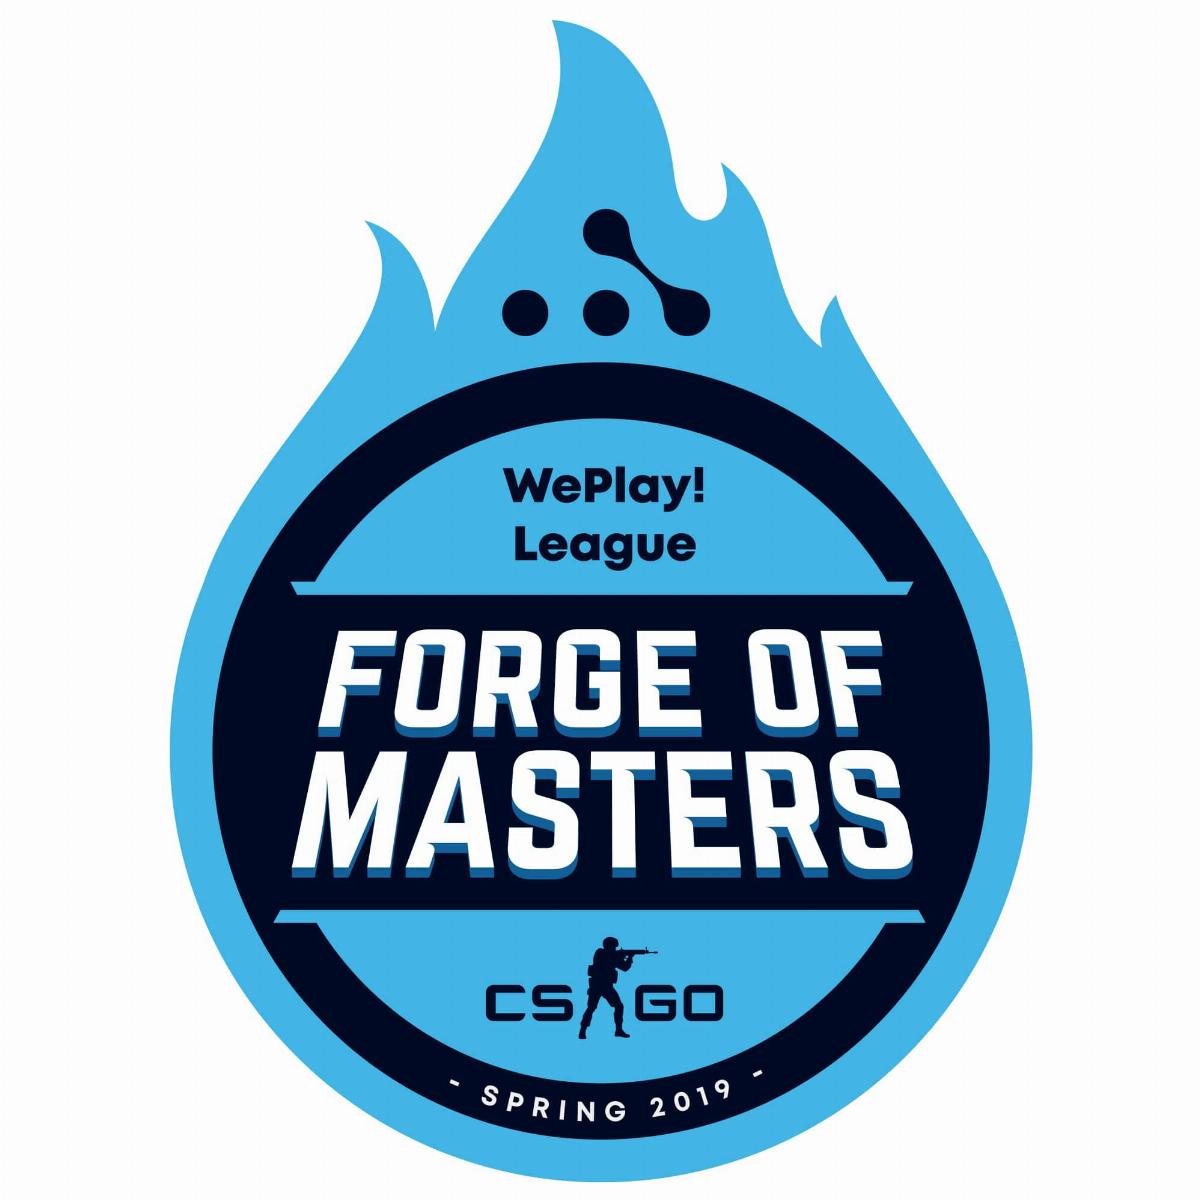 Weplay! Forge of Masters S1, участники Weplay! Forge of Masters S1, Weplay! Forge of Masters S1 как будет прохоить